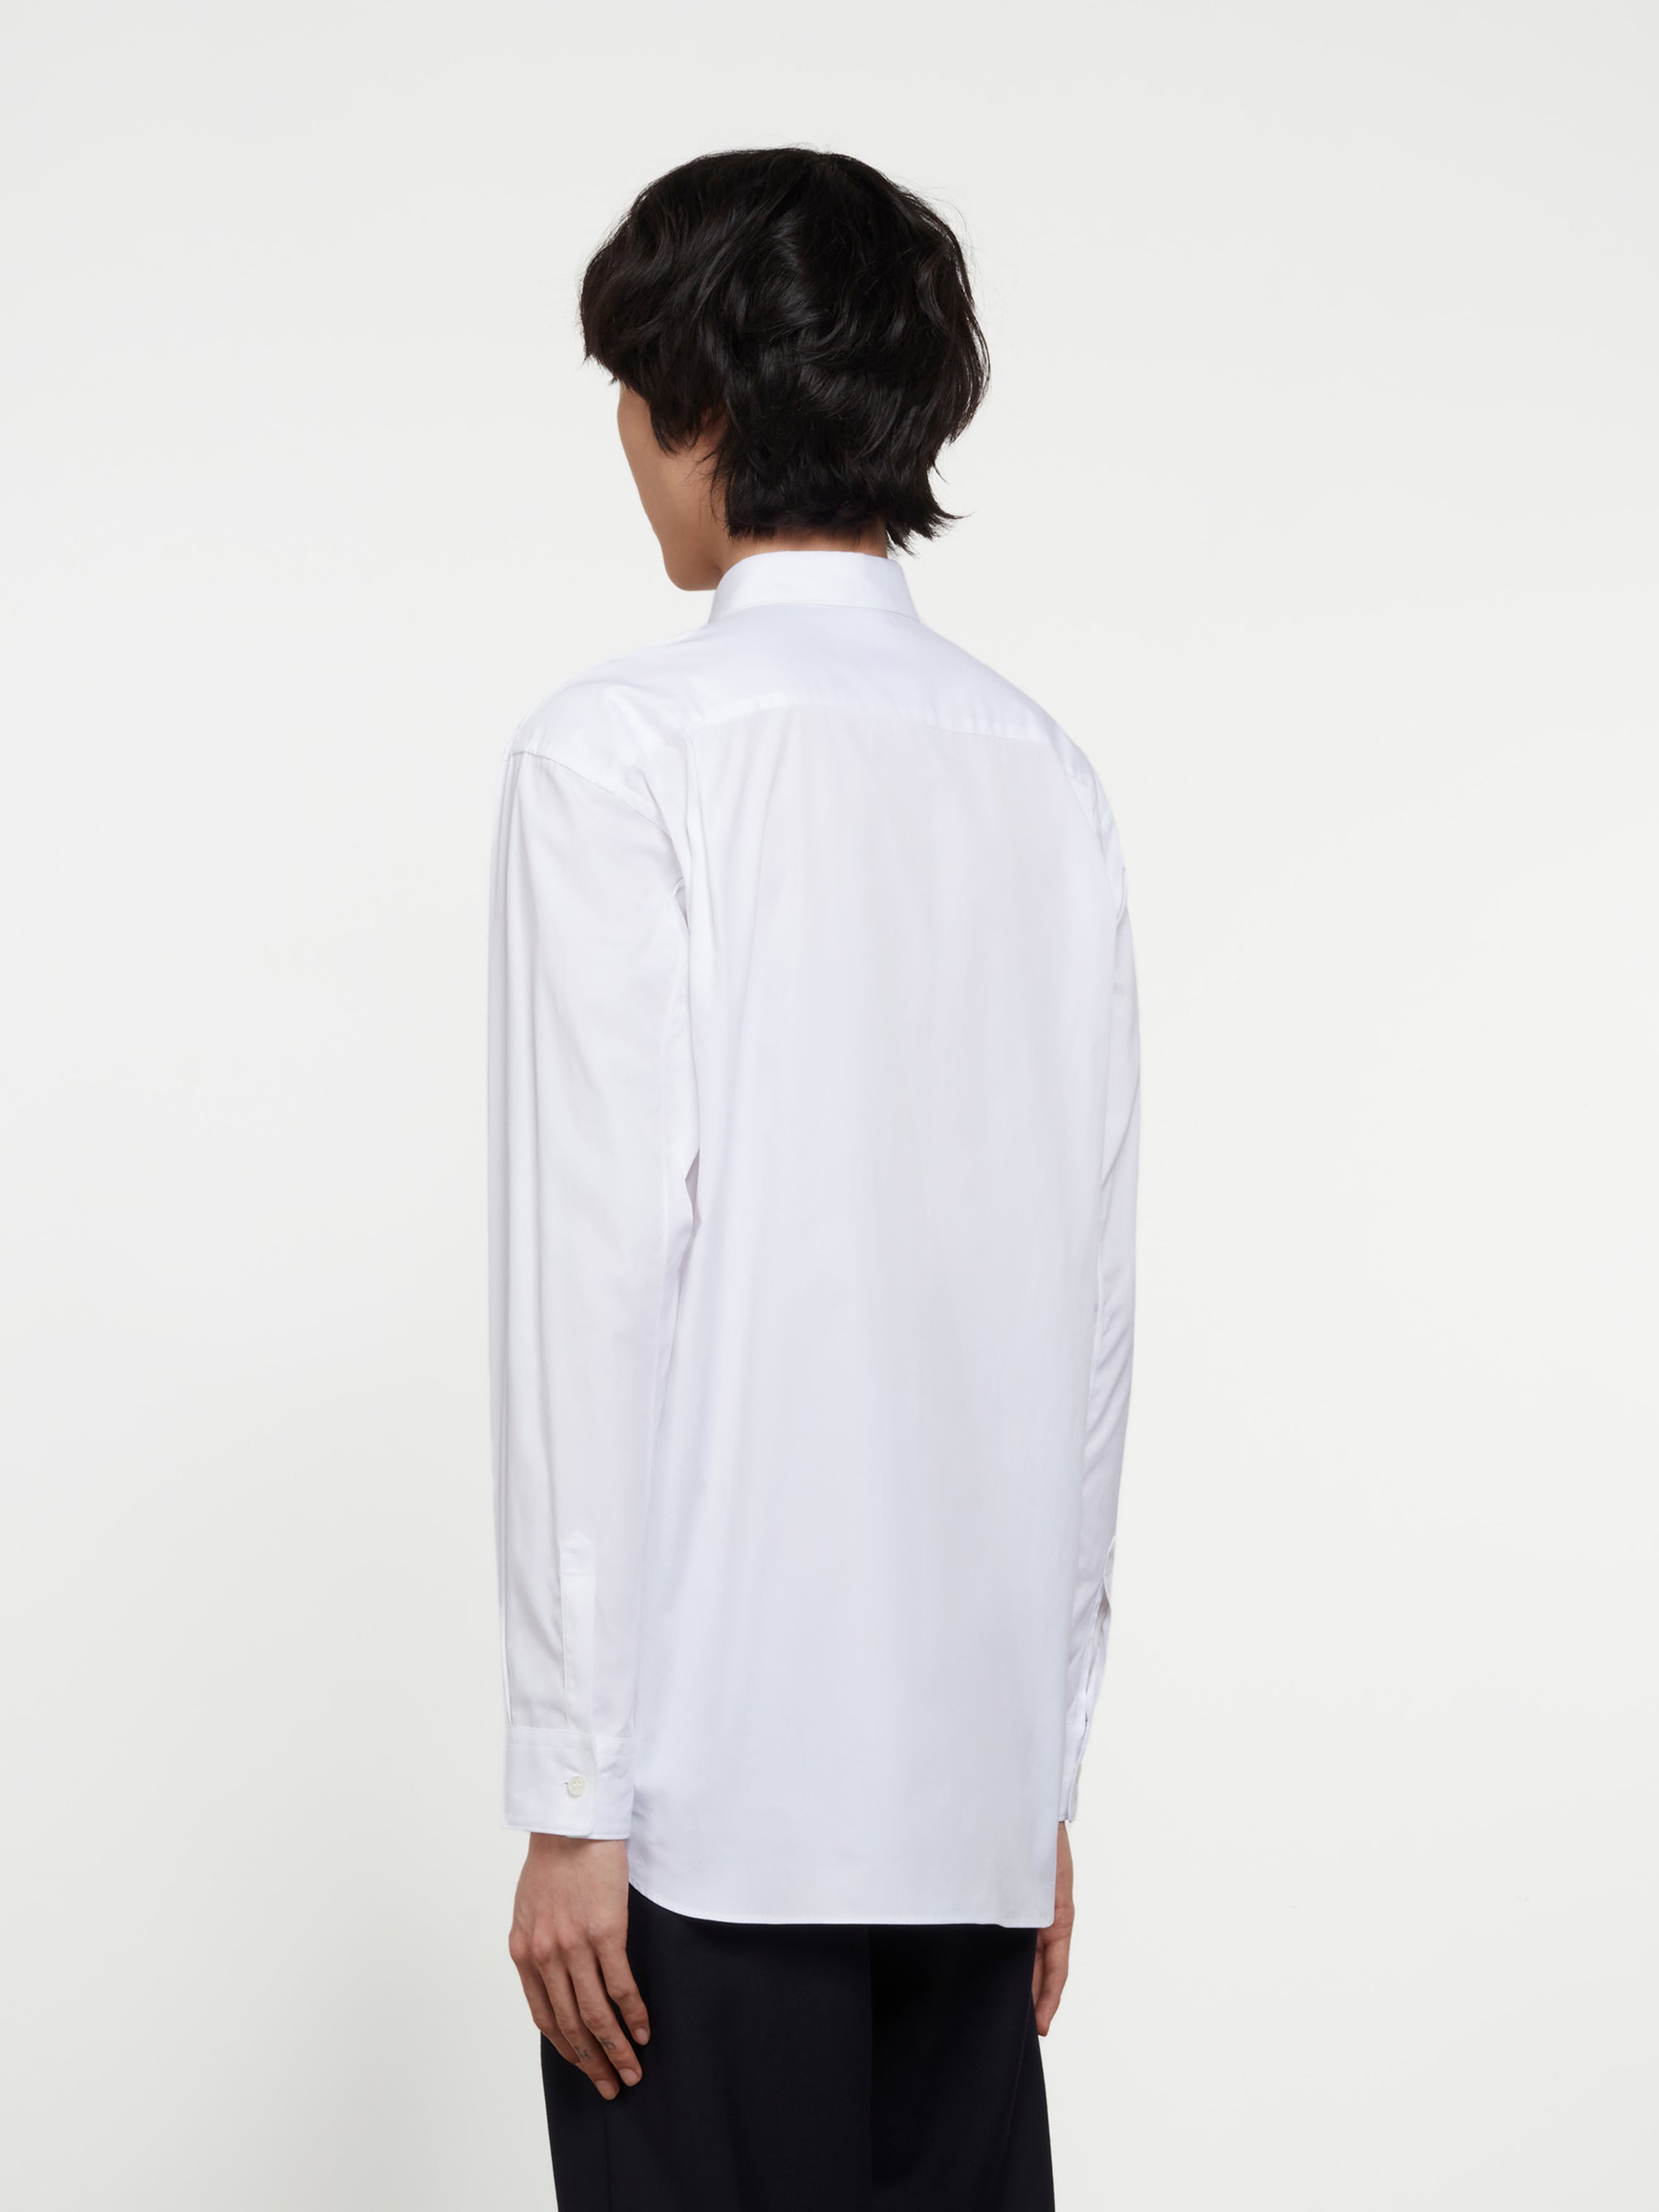 CDG Shirt - Lacoste Men’s Cotton Poplin Shirt - (White) view 3